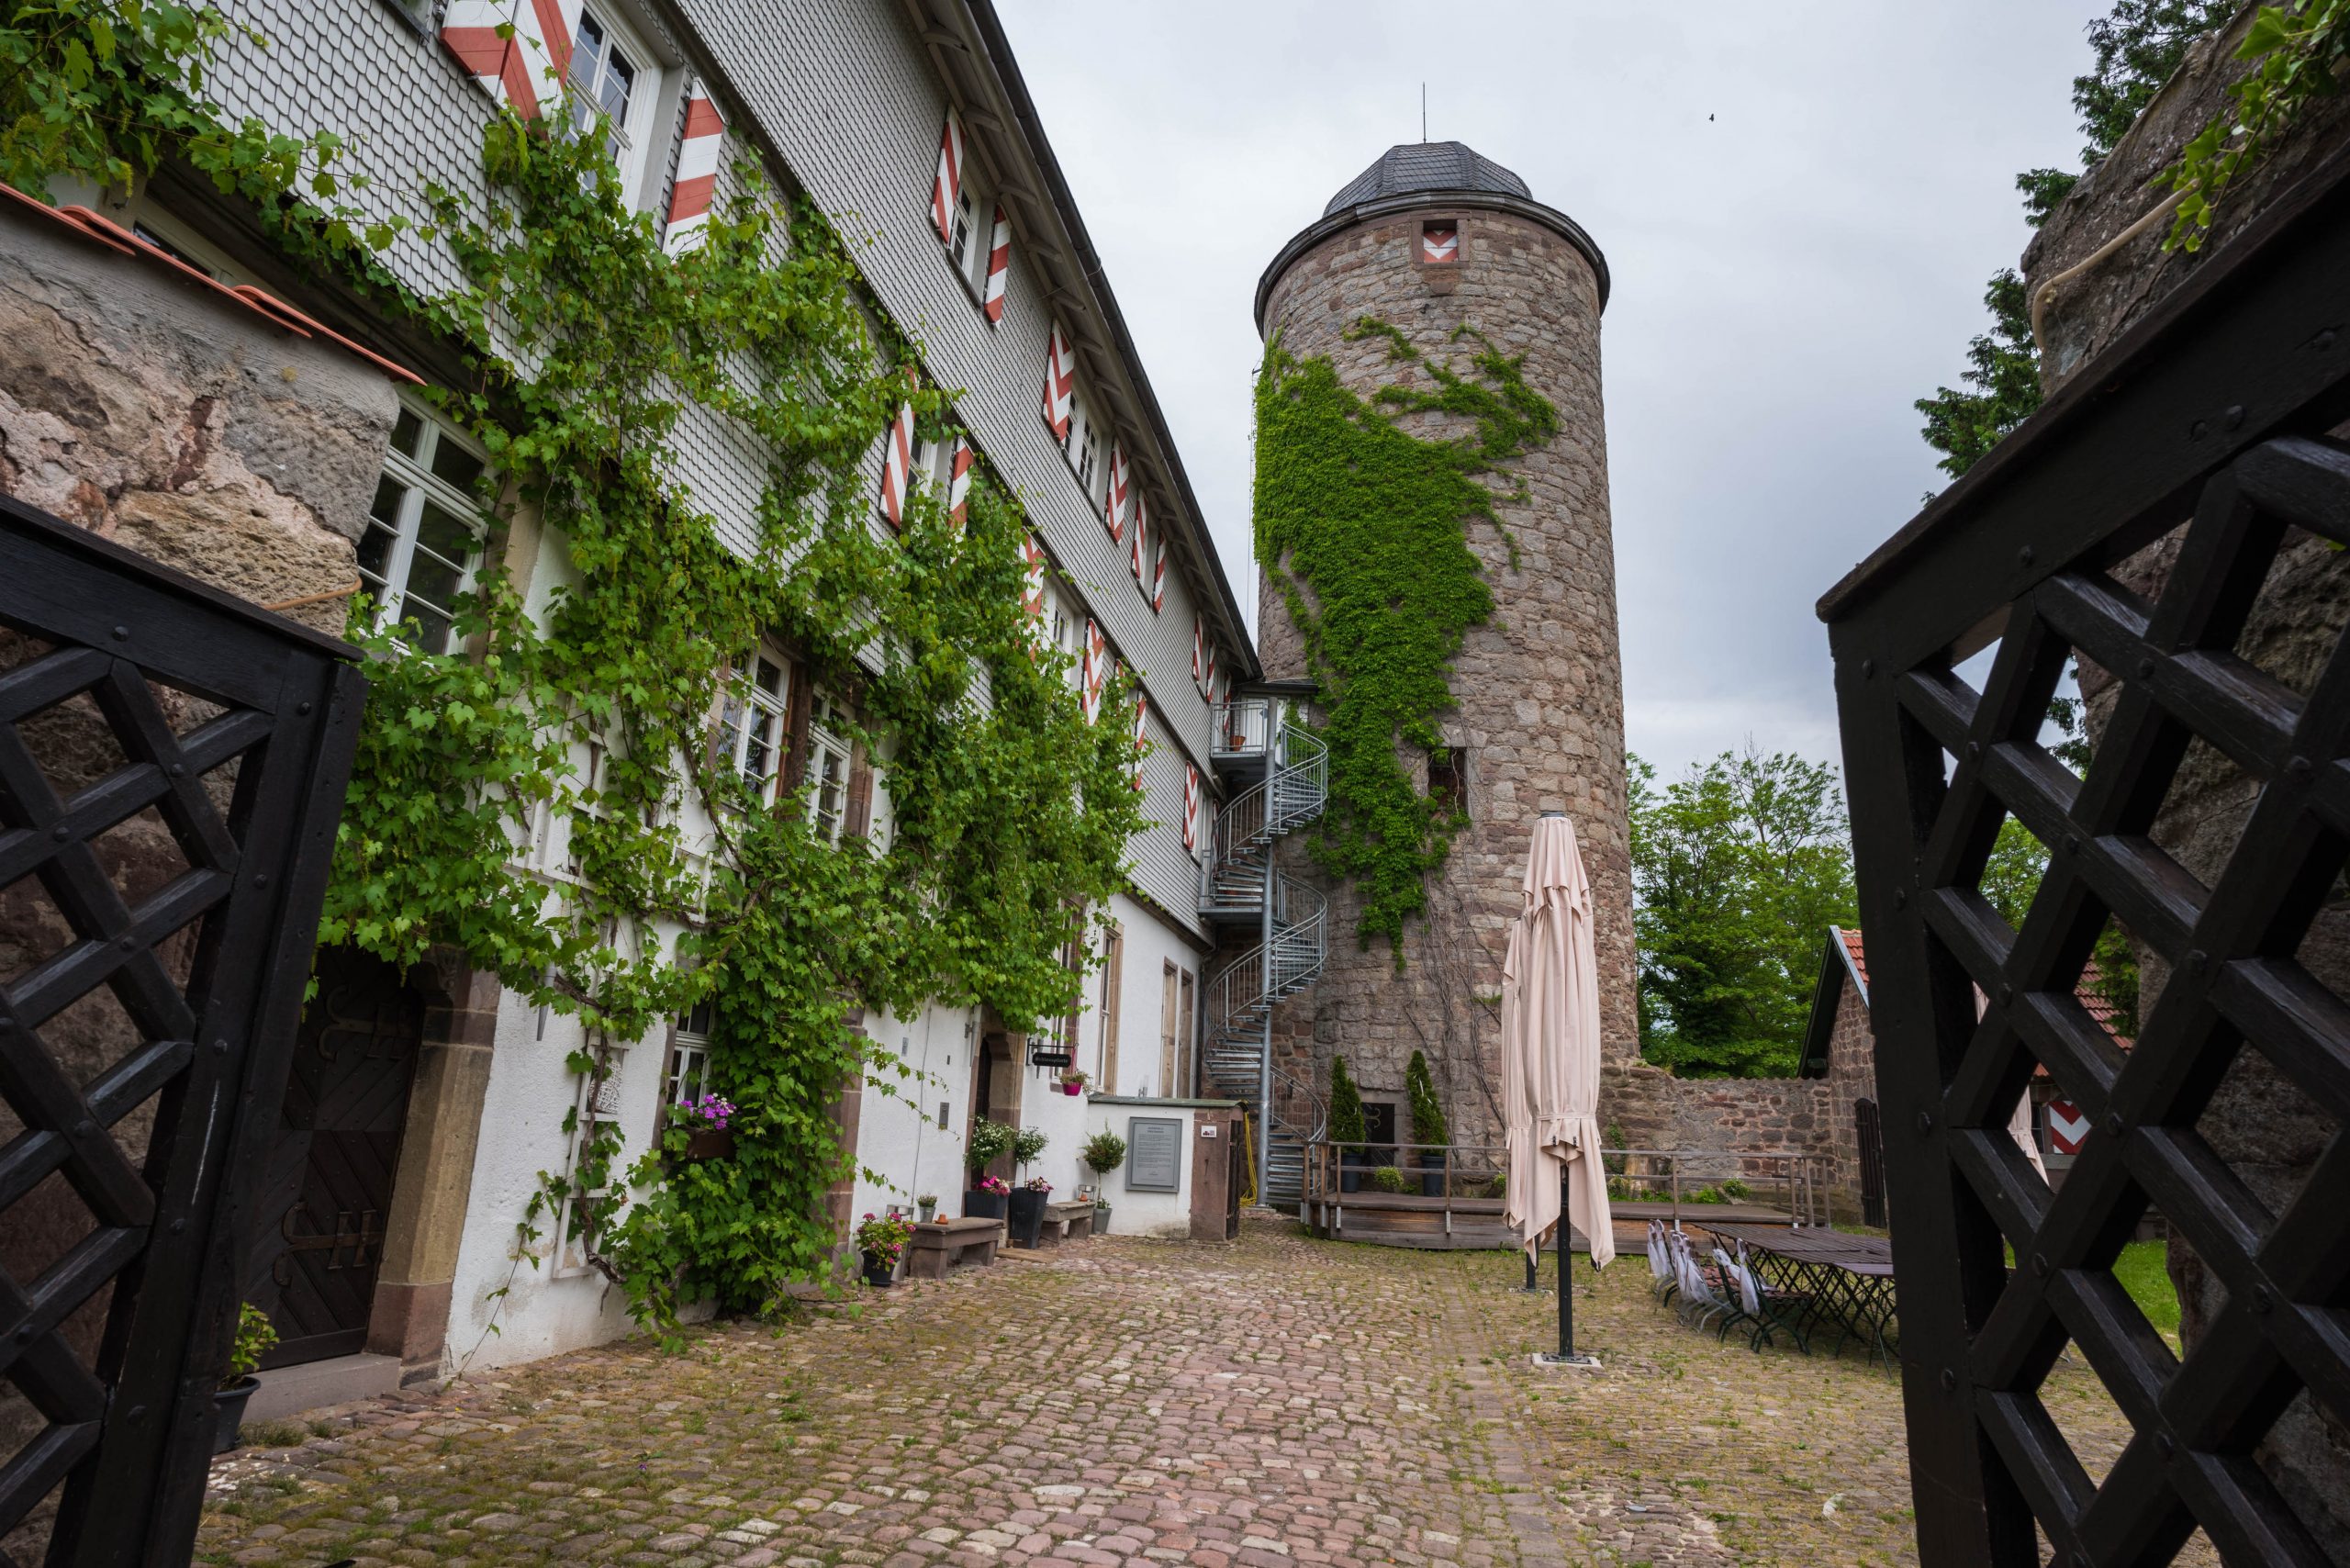 Schloss Neuenstein